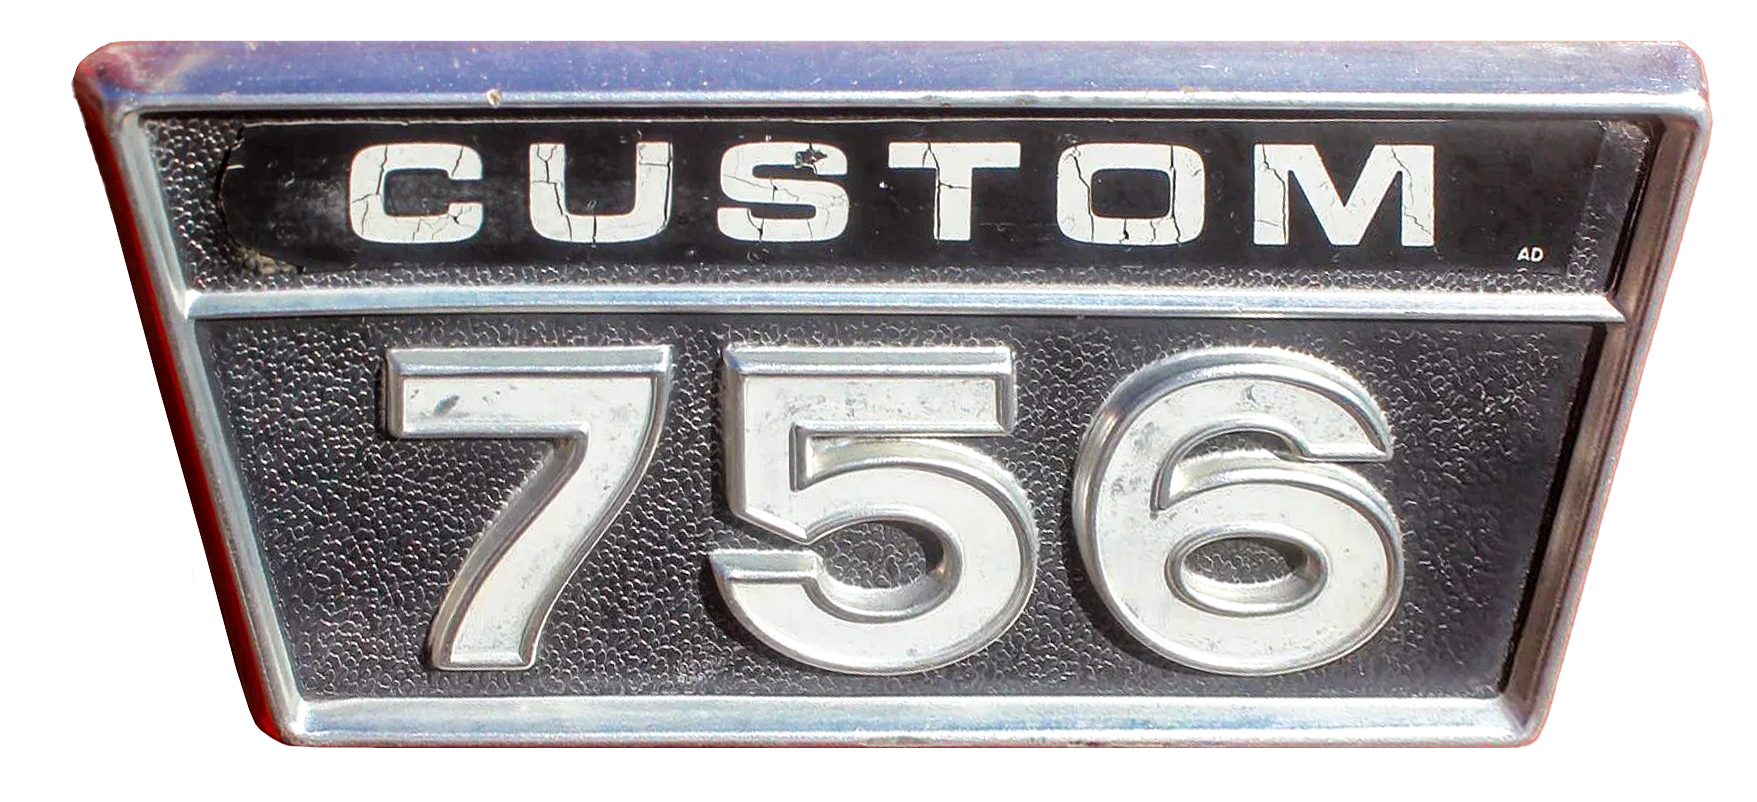 756 Custom badge